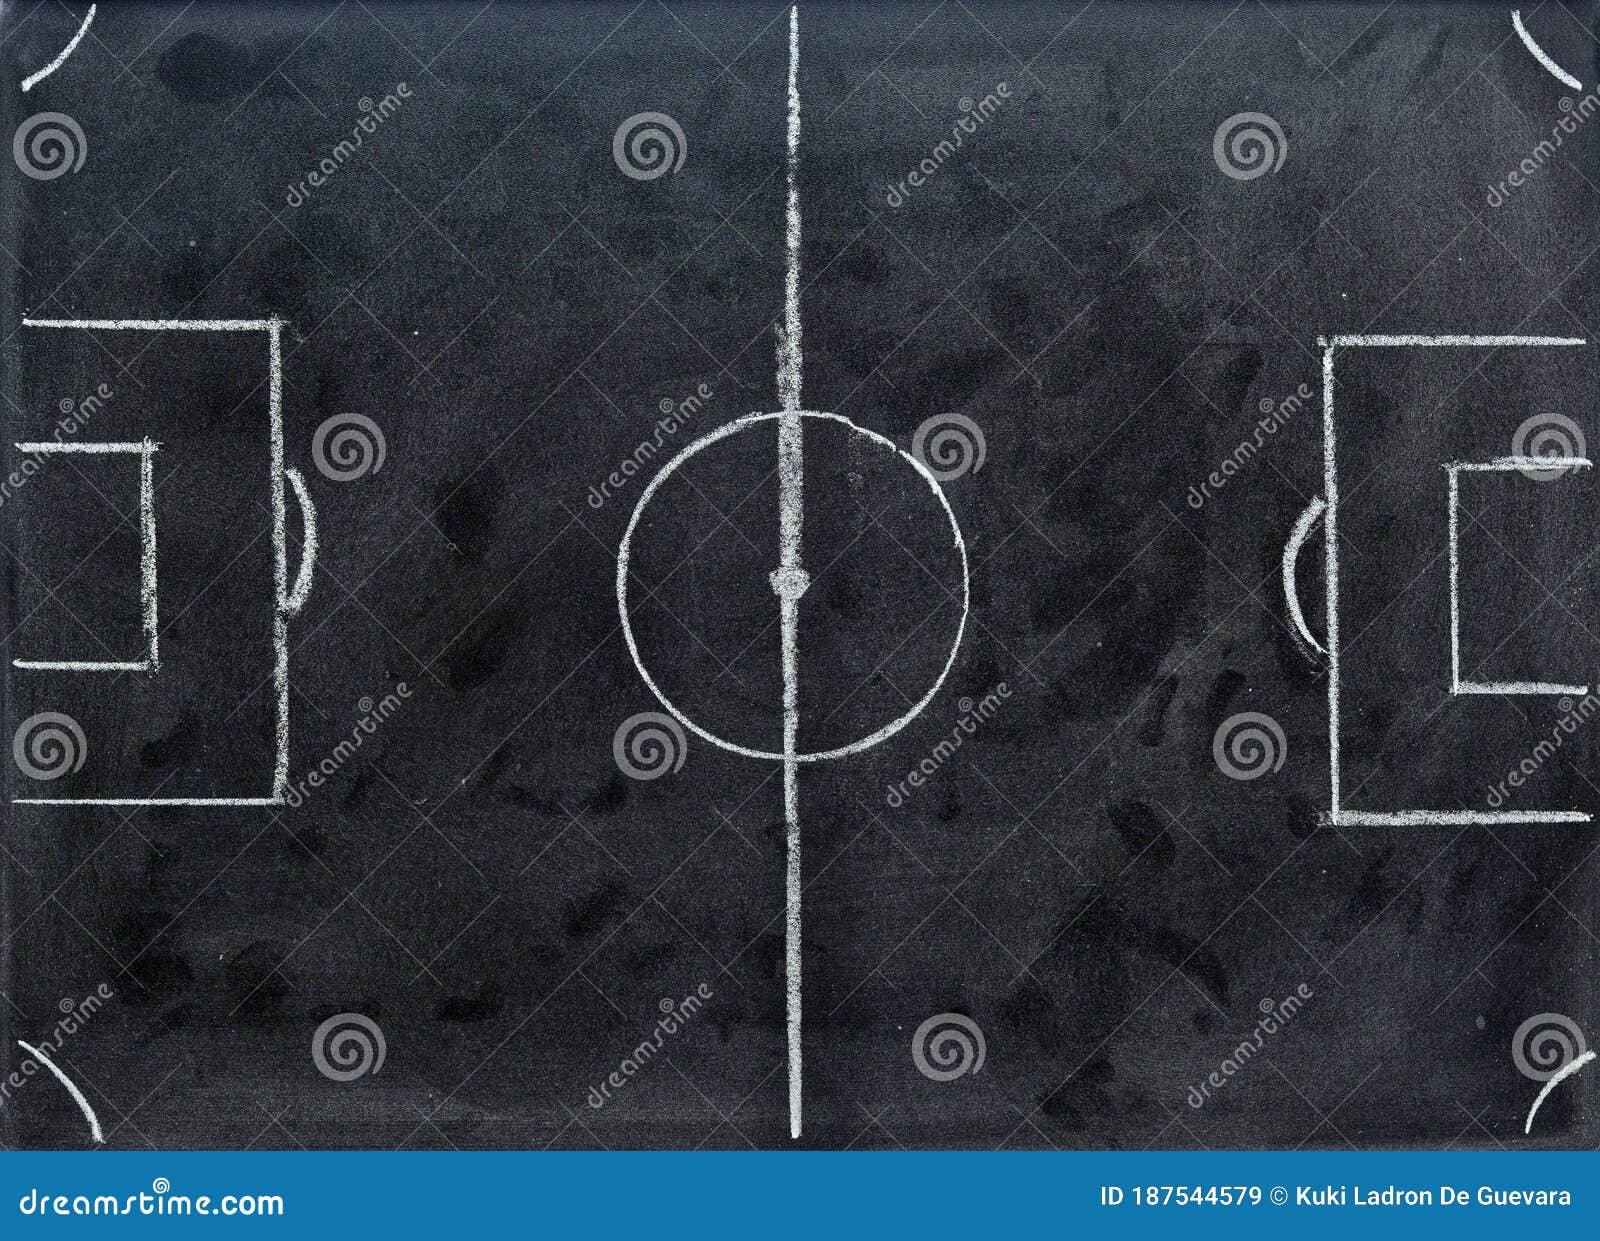 soccer game plan on a blackboard